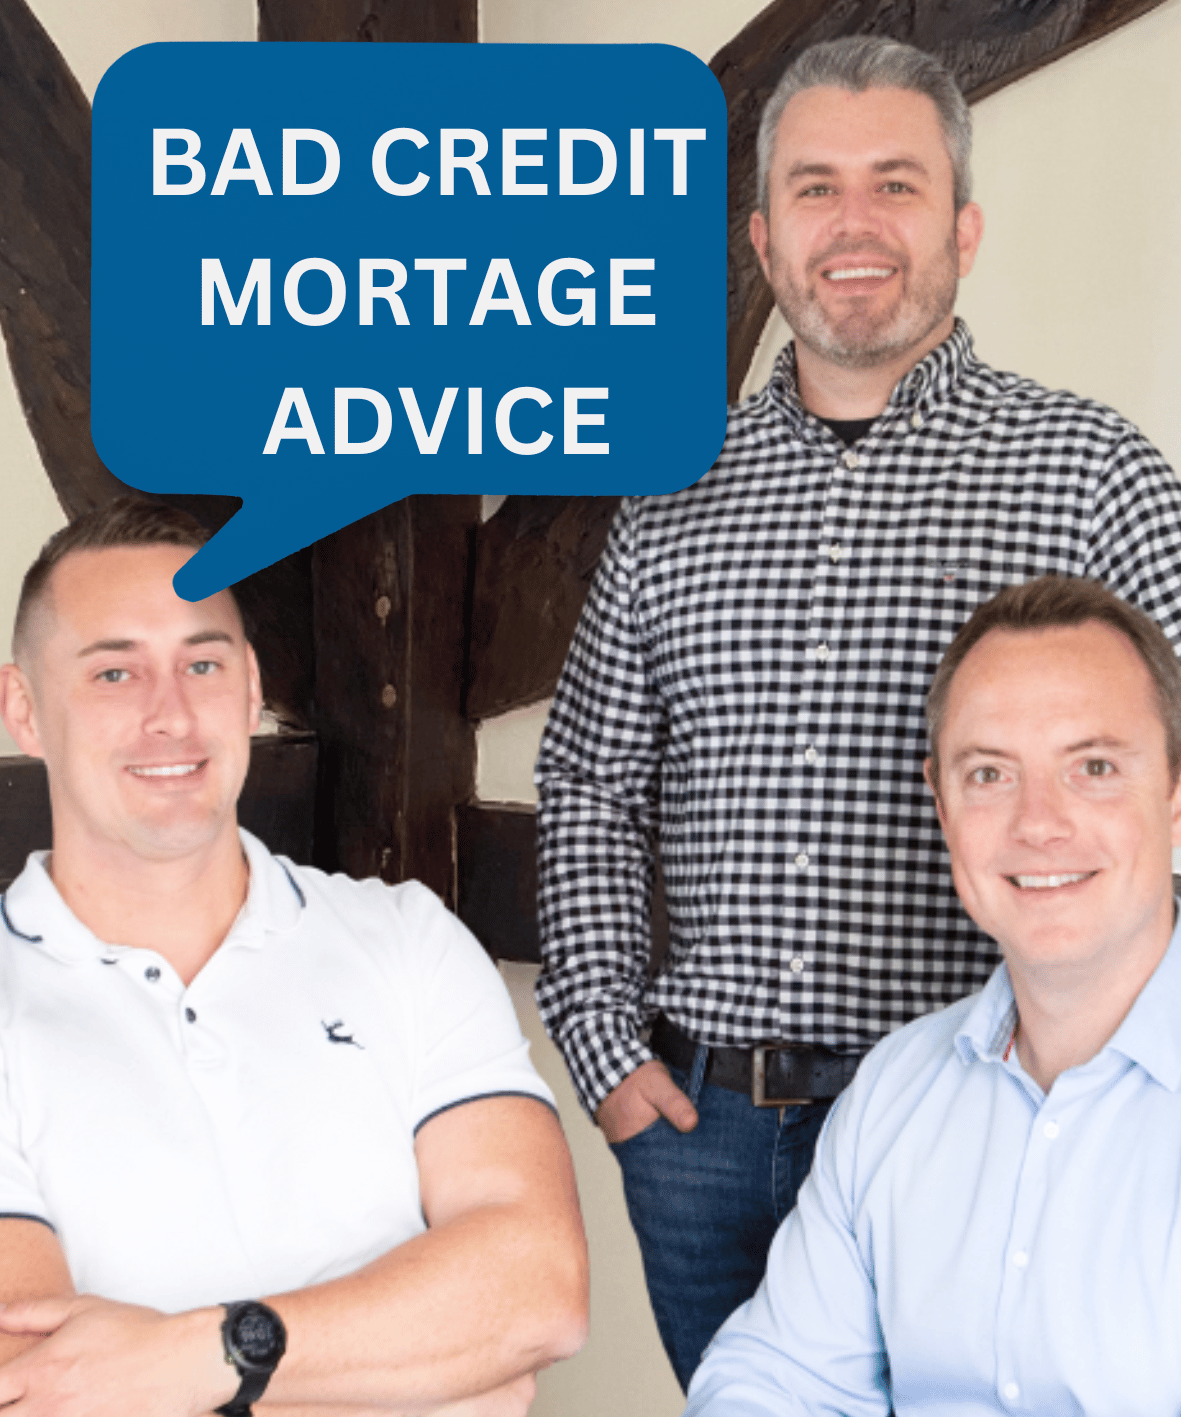 Bad credit mortgage advice